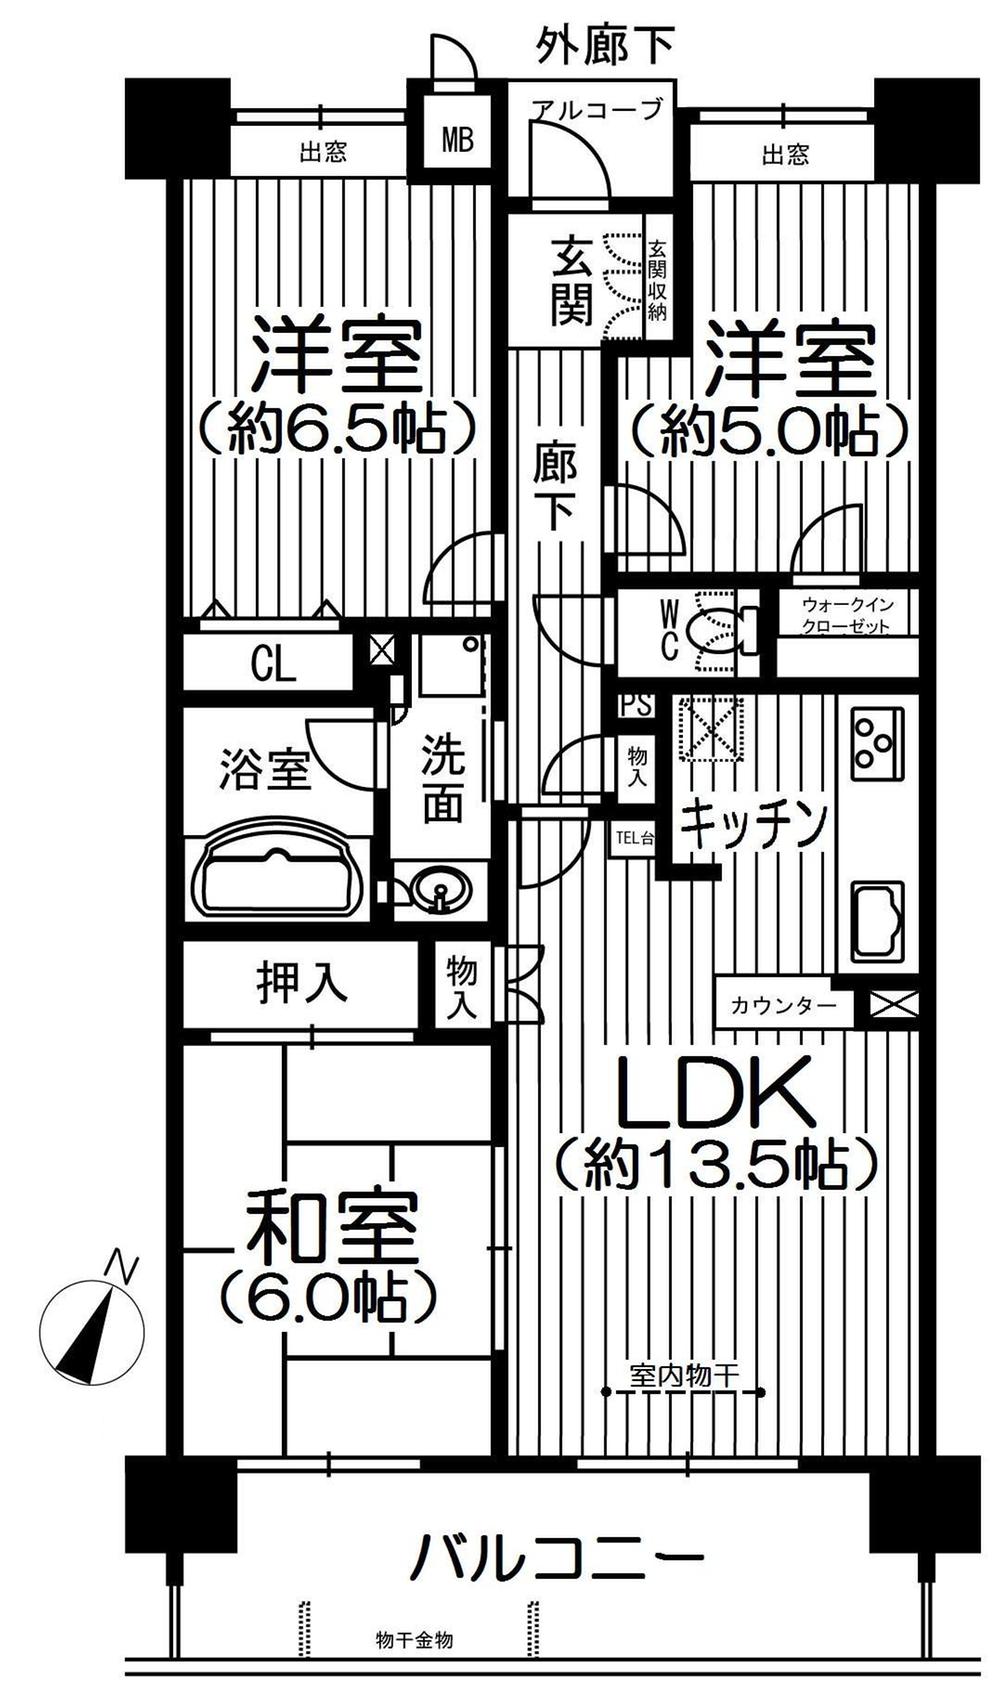 Floor plan. 3LDK, Price 22 million yen, Occupied area 68.71 sq m , Balcony area 11.34 sq m